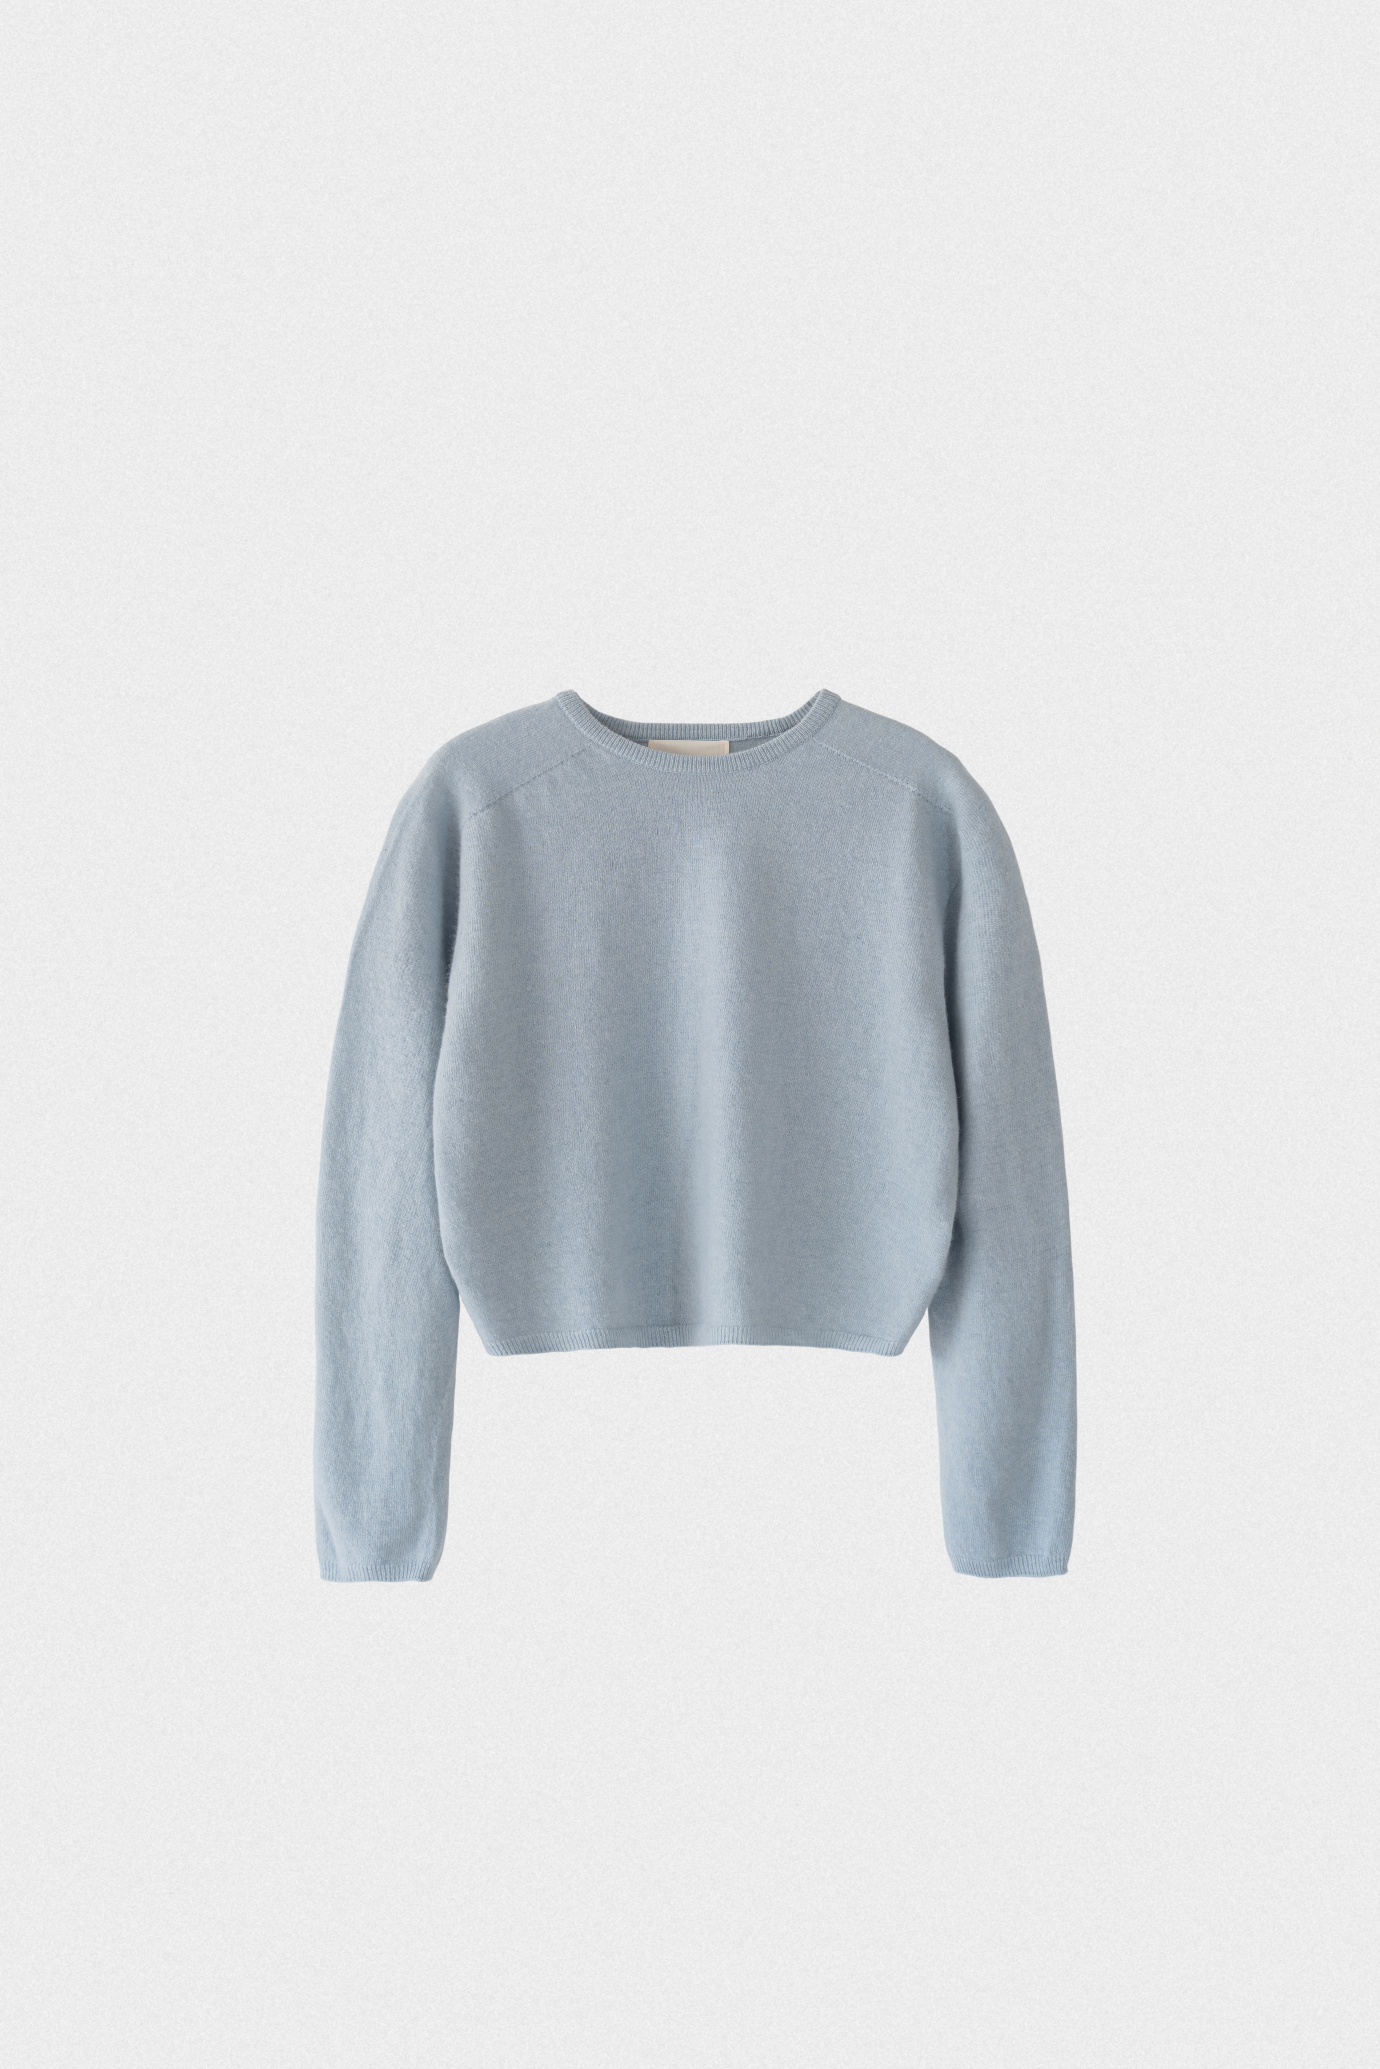 19885_Wool Crewneck Sweater [ow]